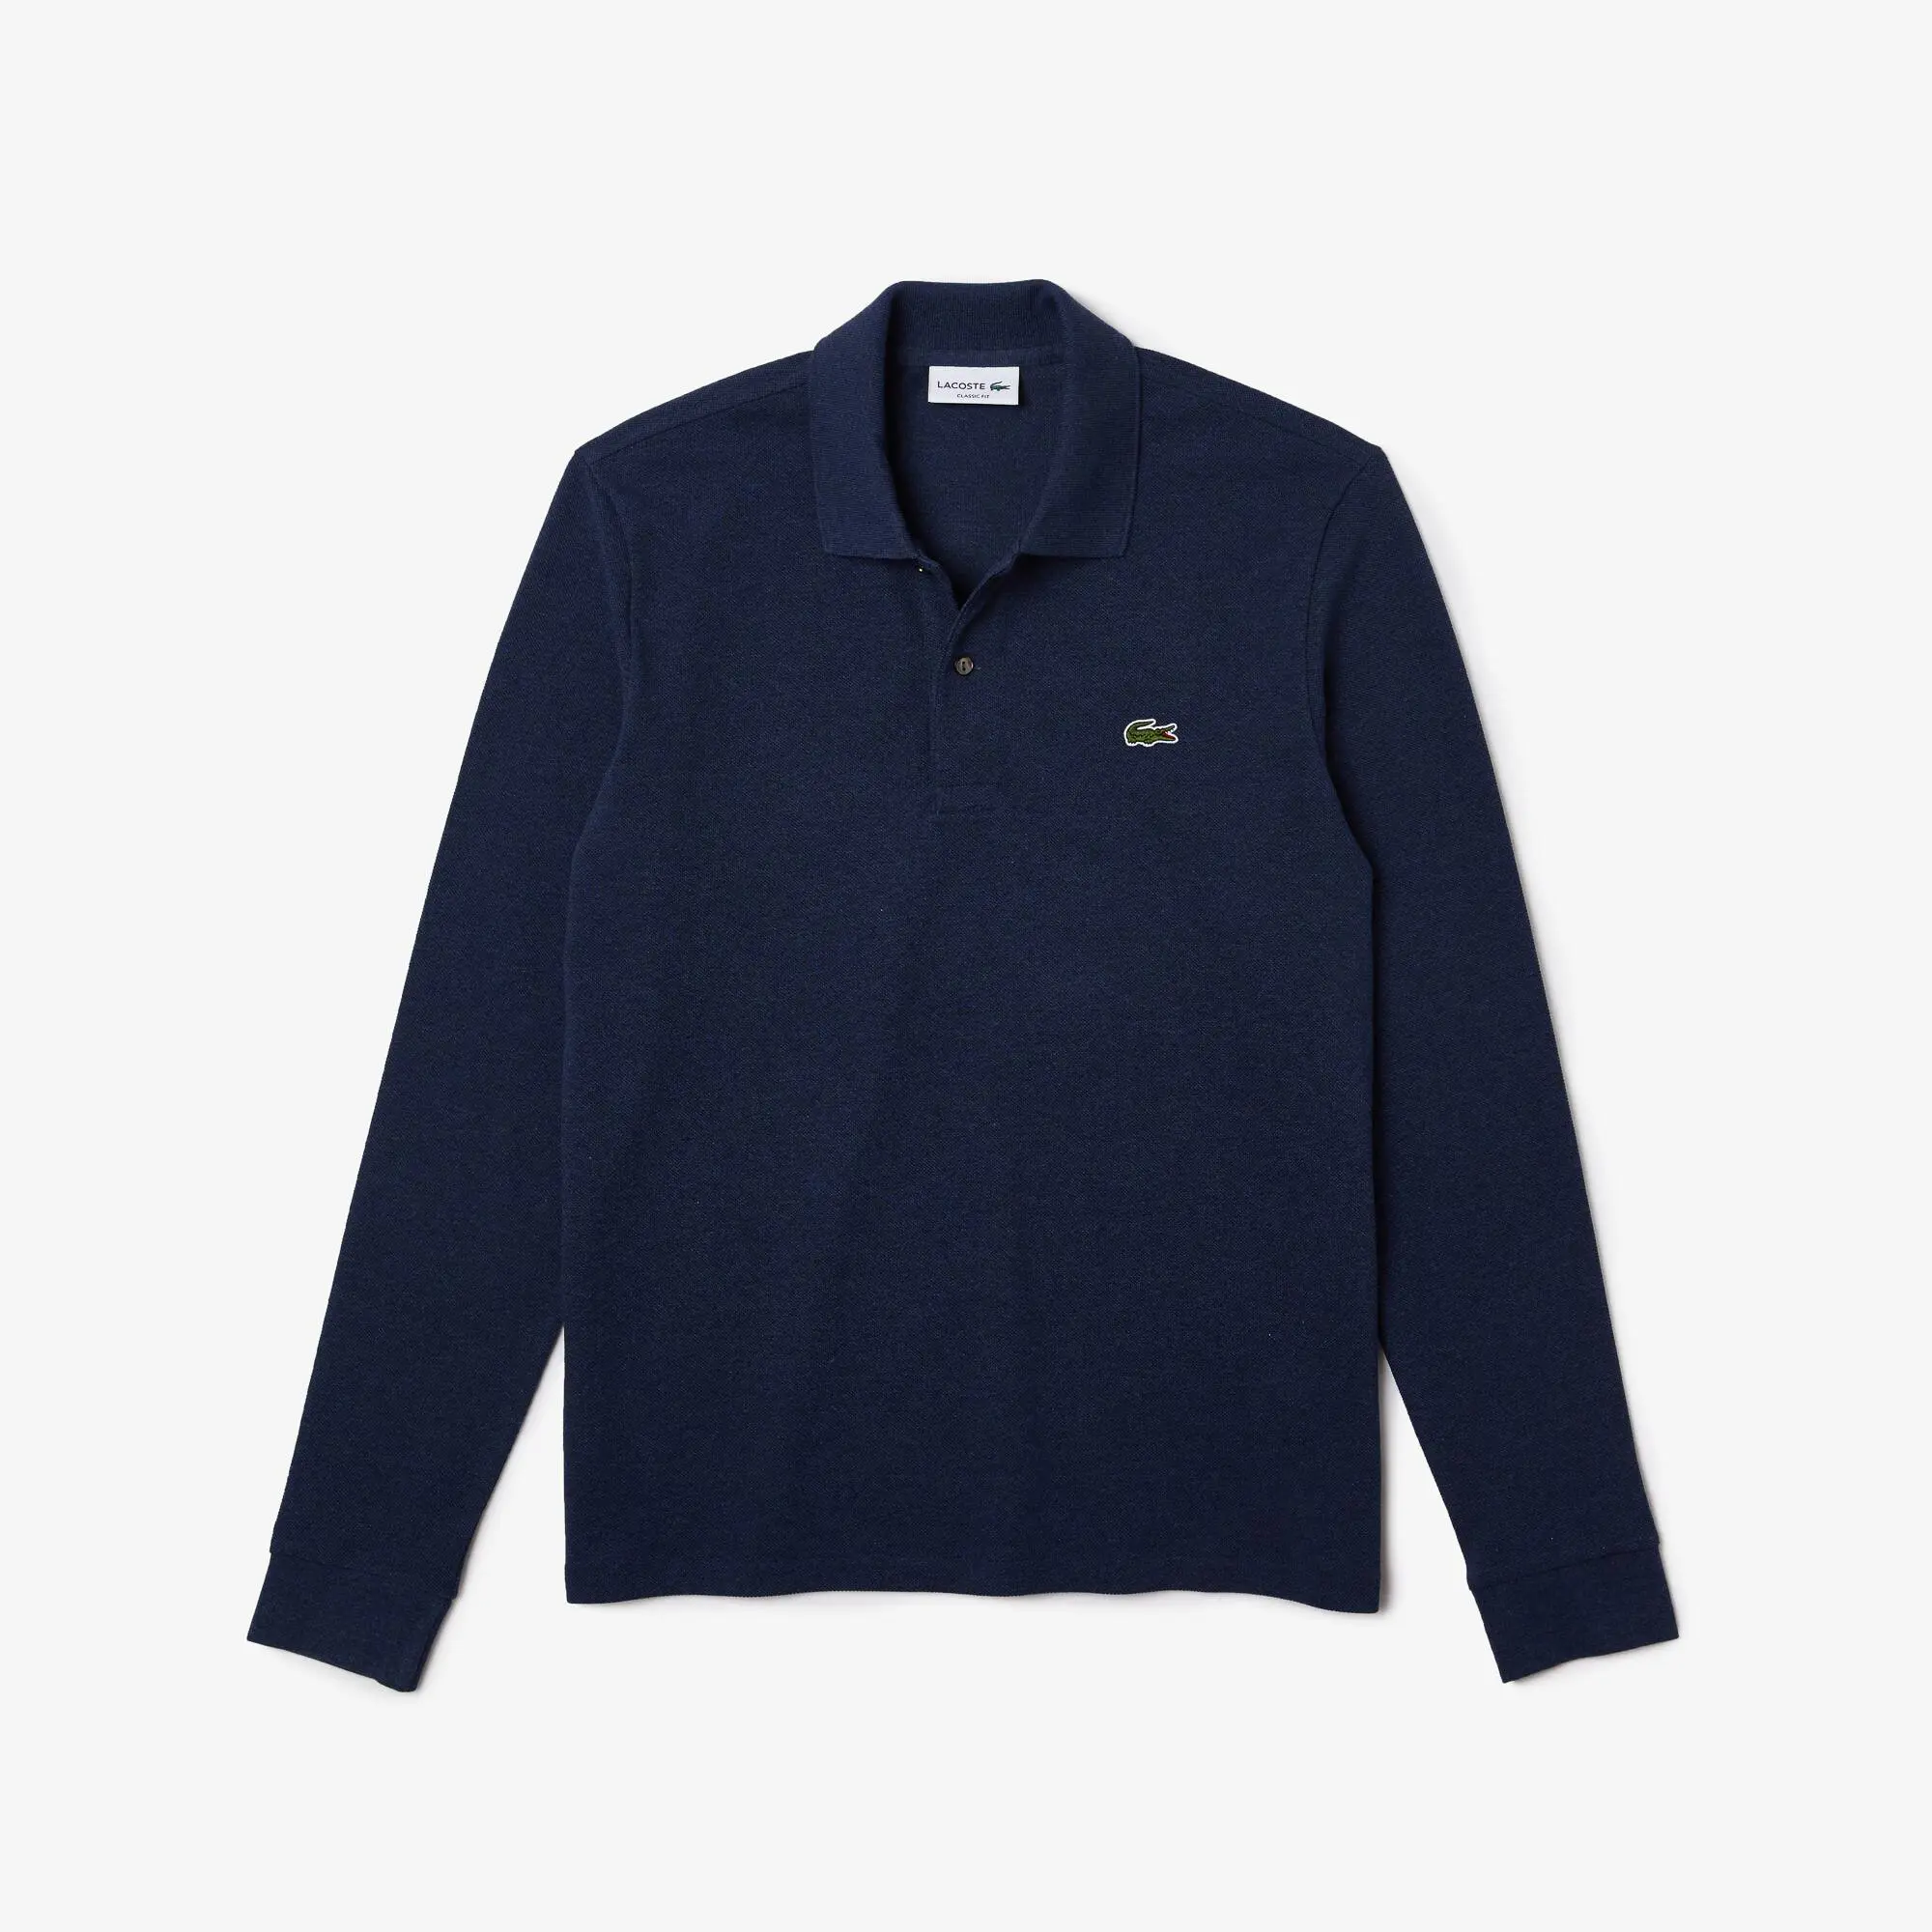 Lacoste Original L.12.12 Long Sleeve Heathered Cotton Polo Shirt. 2